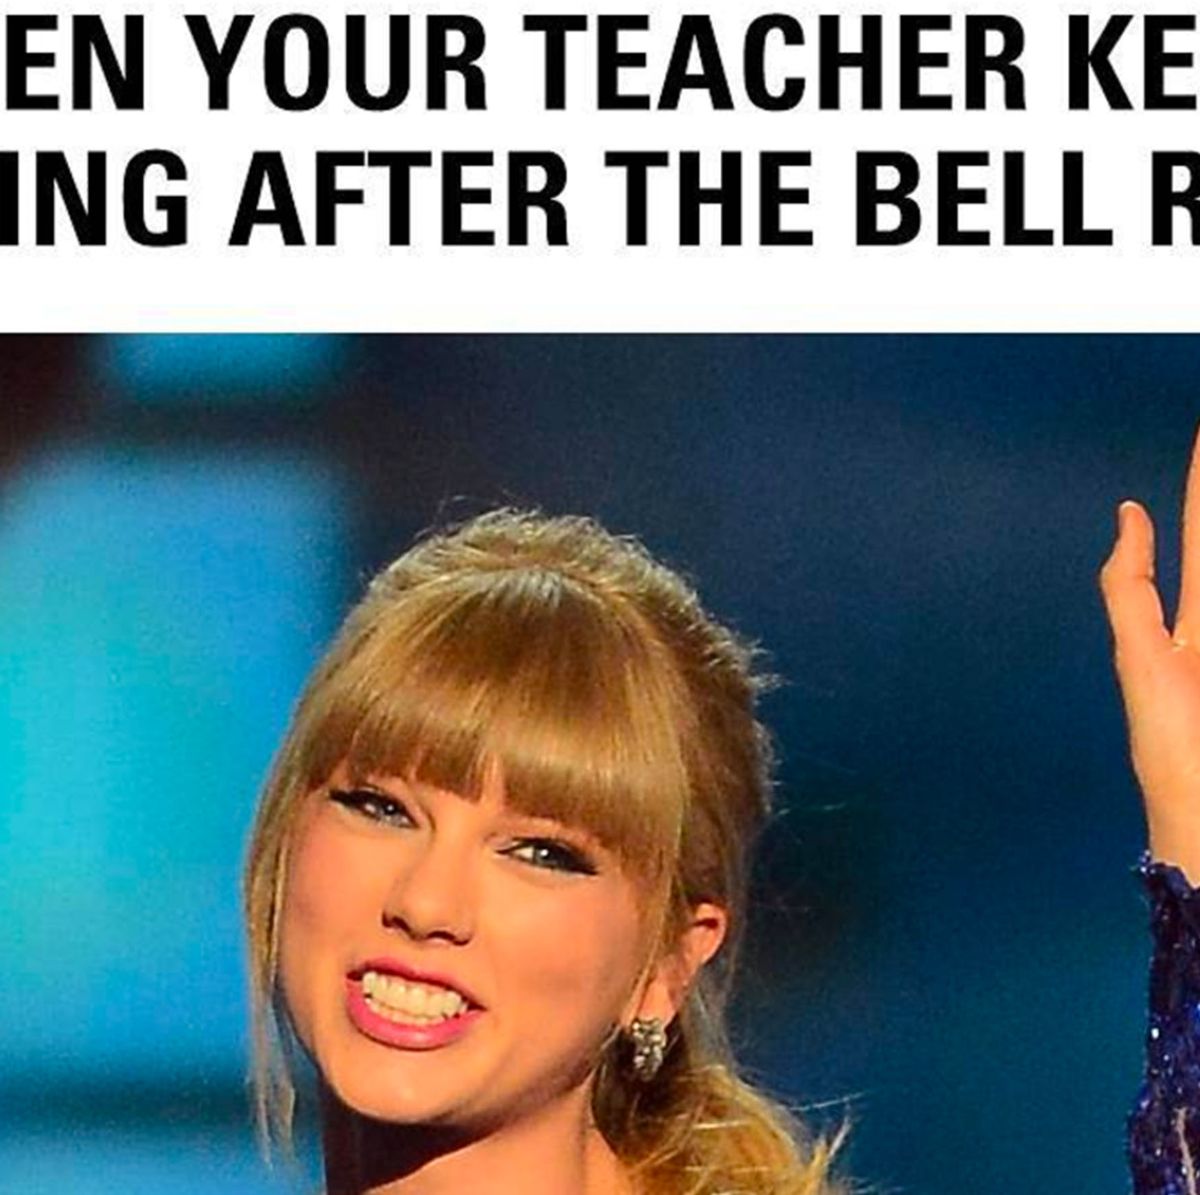 16 Funniest Teacher Memes 2018 - Relatable Memes About Students And Teachers